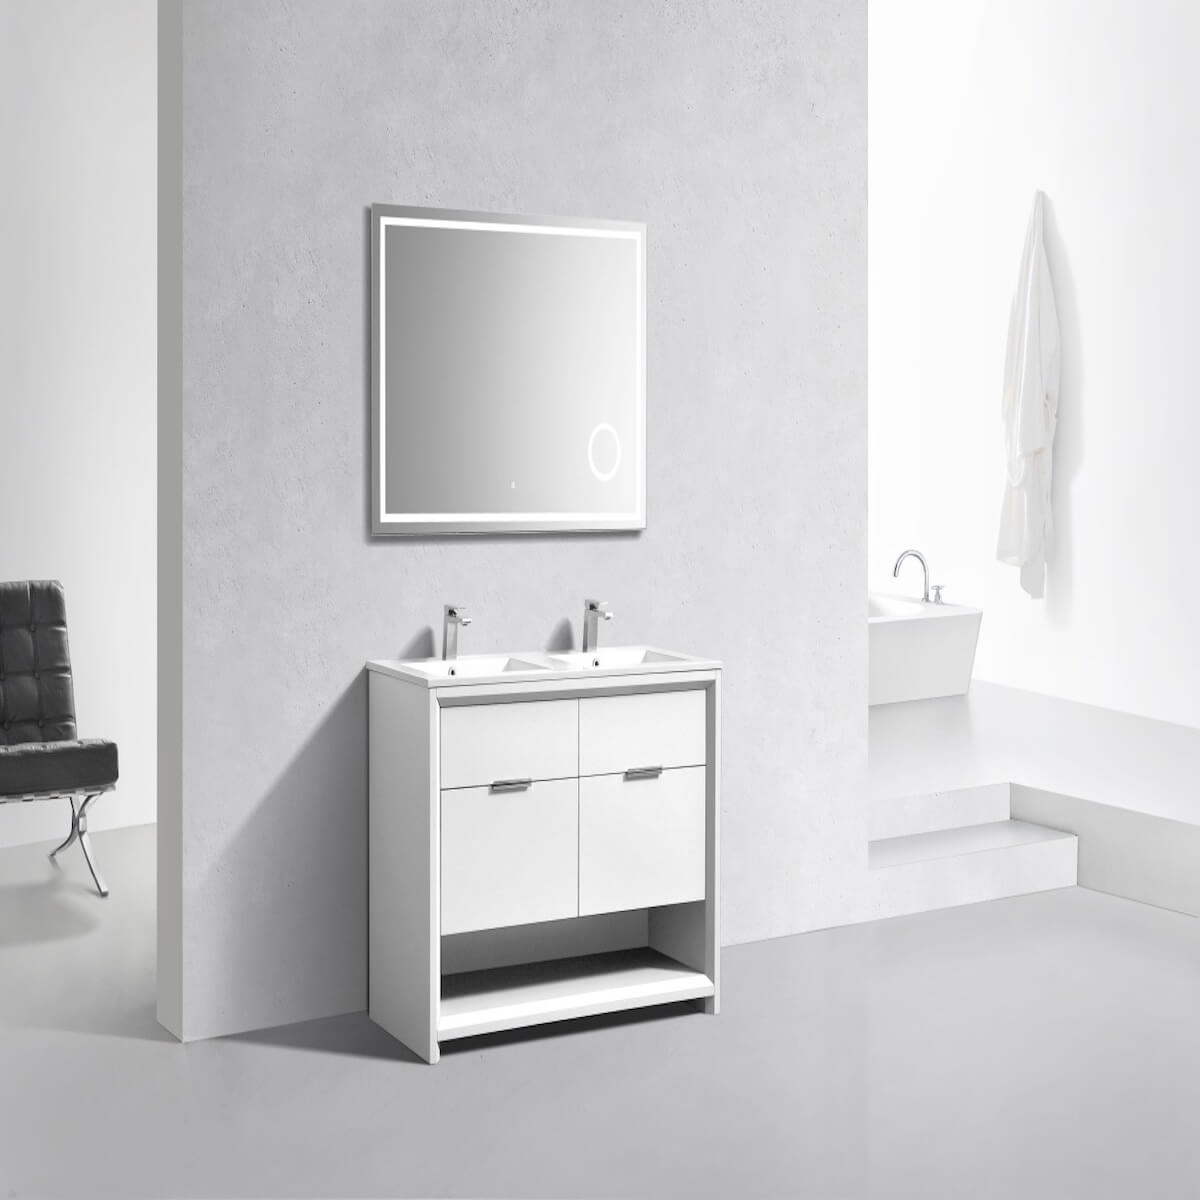 KubeBath Nudo 48" Gloss White Double Sink Free Standing Modern Bathroom Vanity Side in Bathroom NUDO48D-GW #finish_gloss white